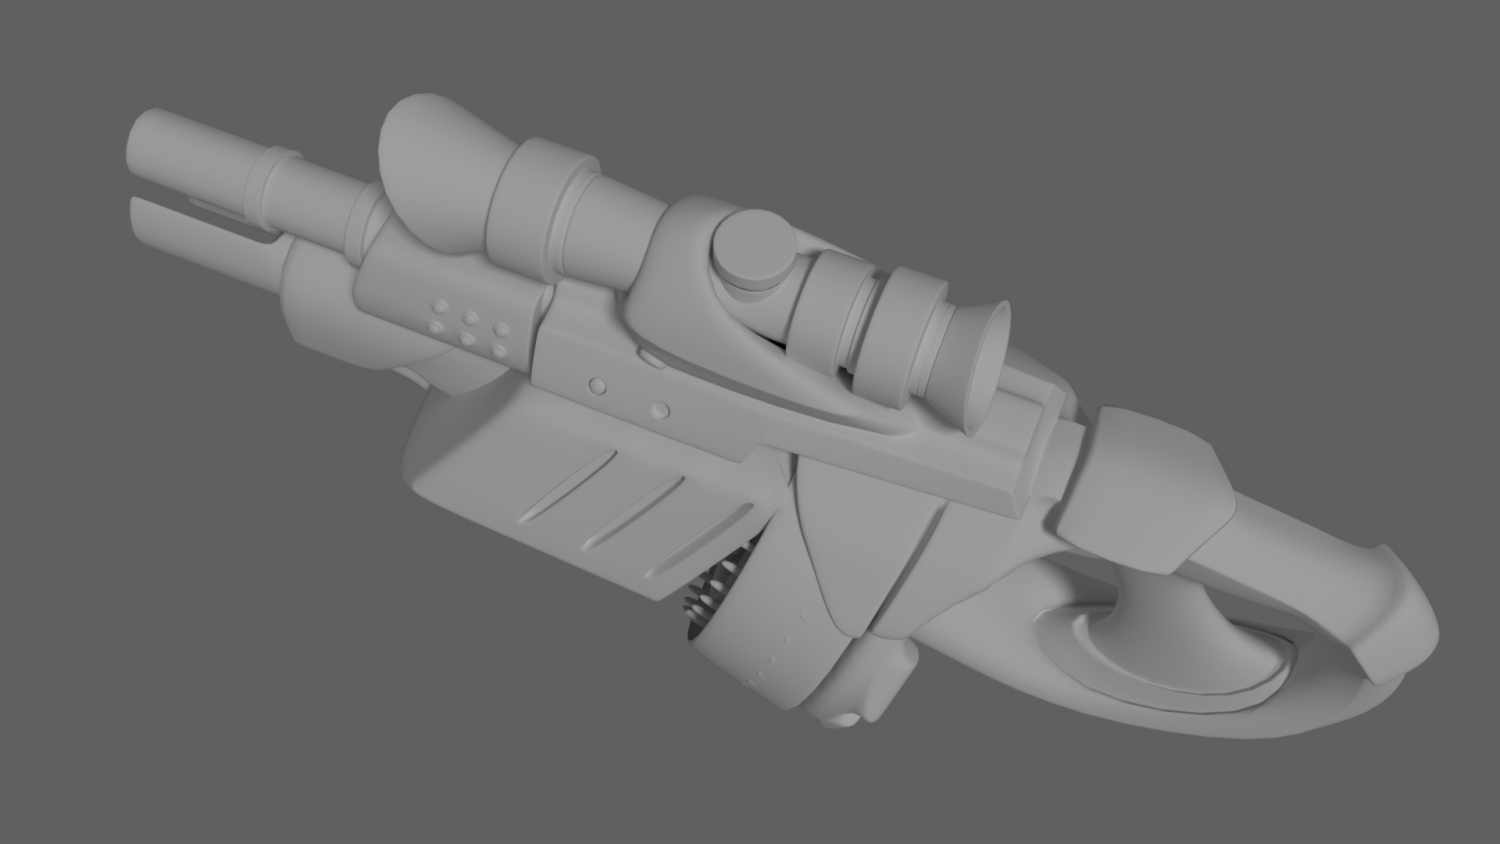 Concept rifle